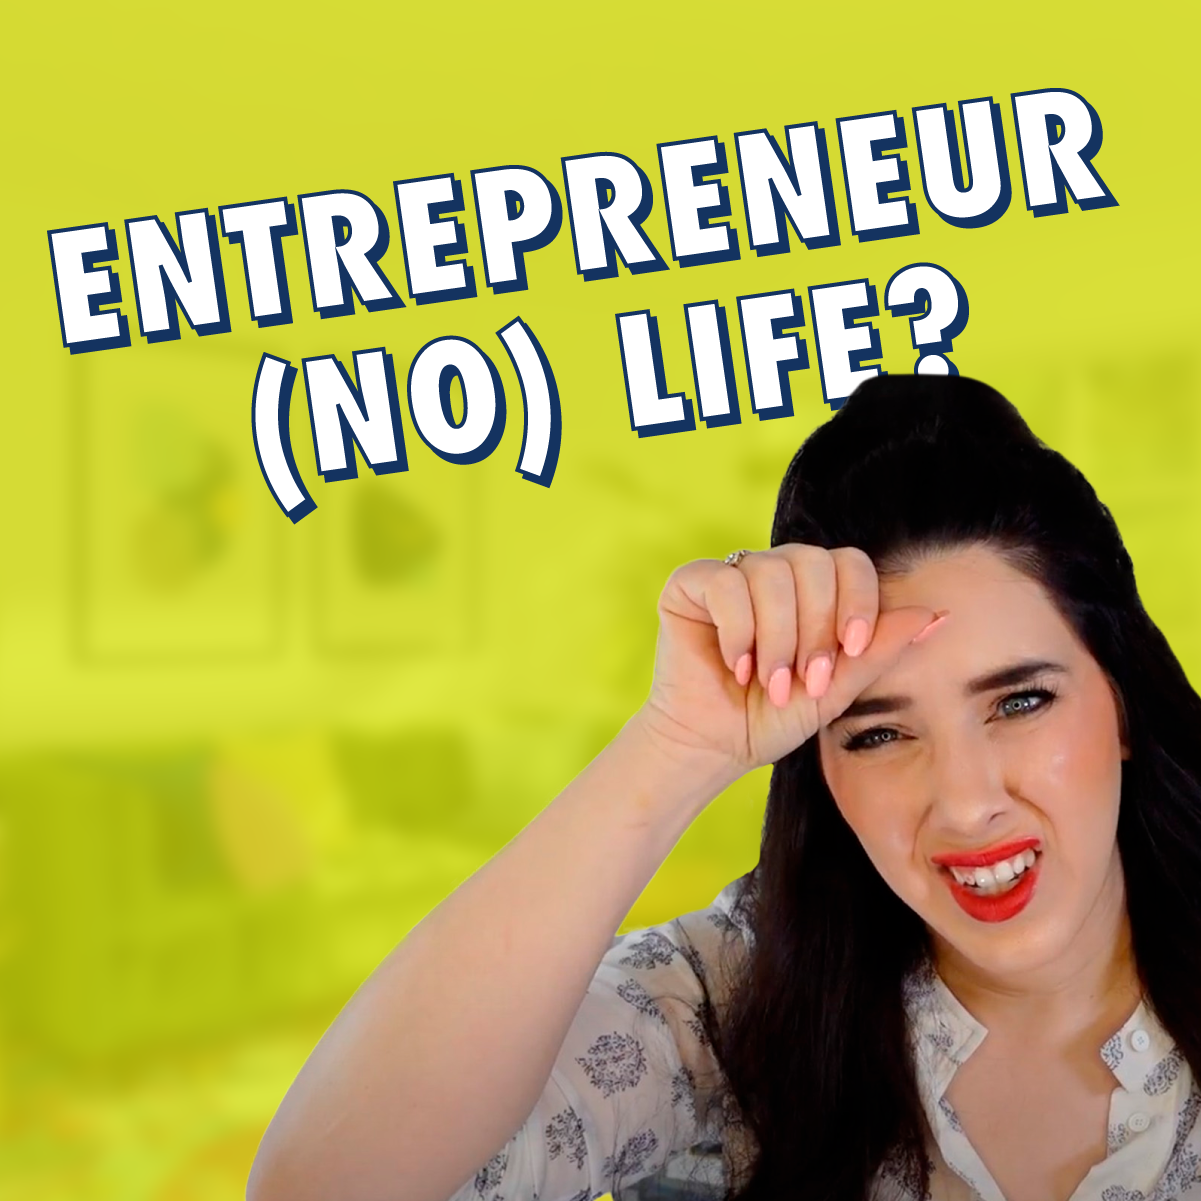 Christina-Scalera-Personal-Life-as-an-Entrepreneur